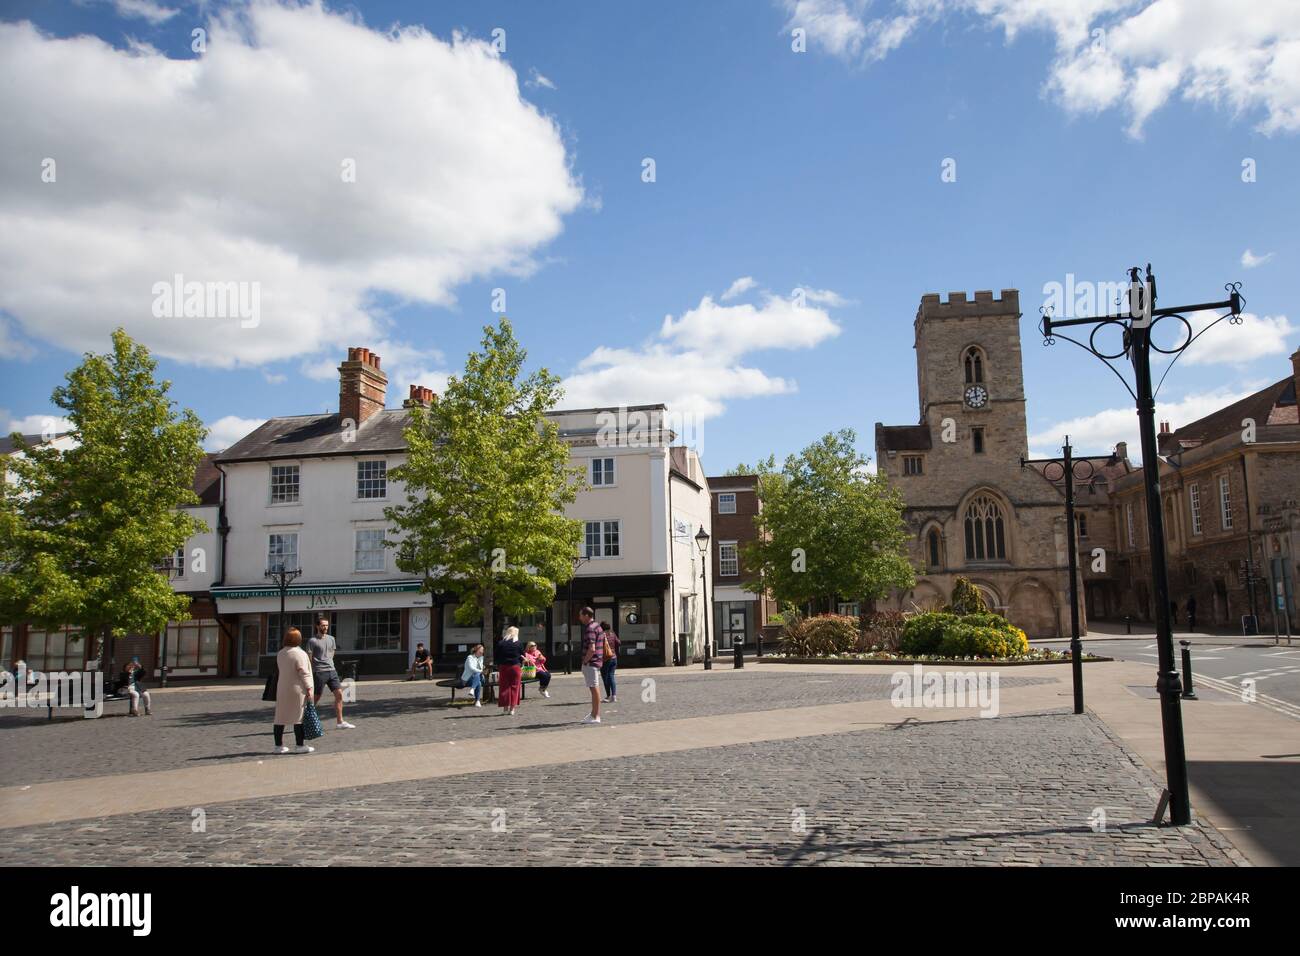 The market square in Abingdon Town Centre in Oxfordshire, UK Stock Photo